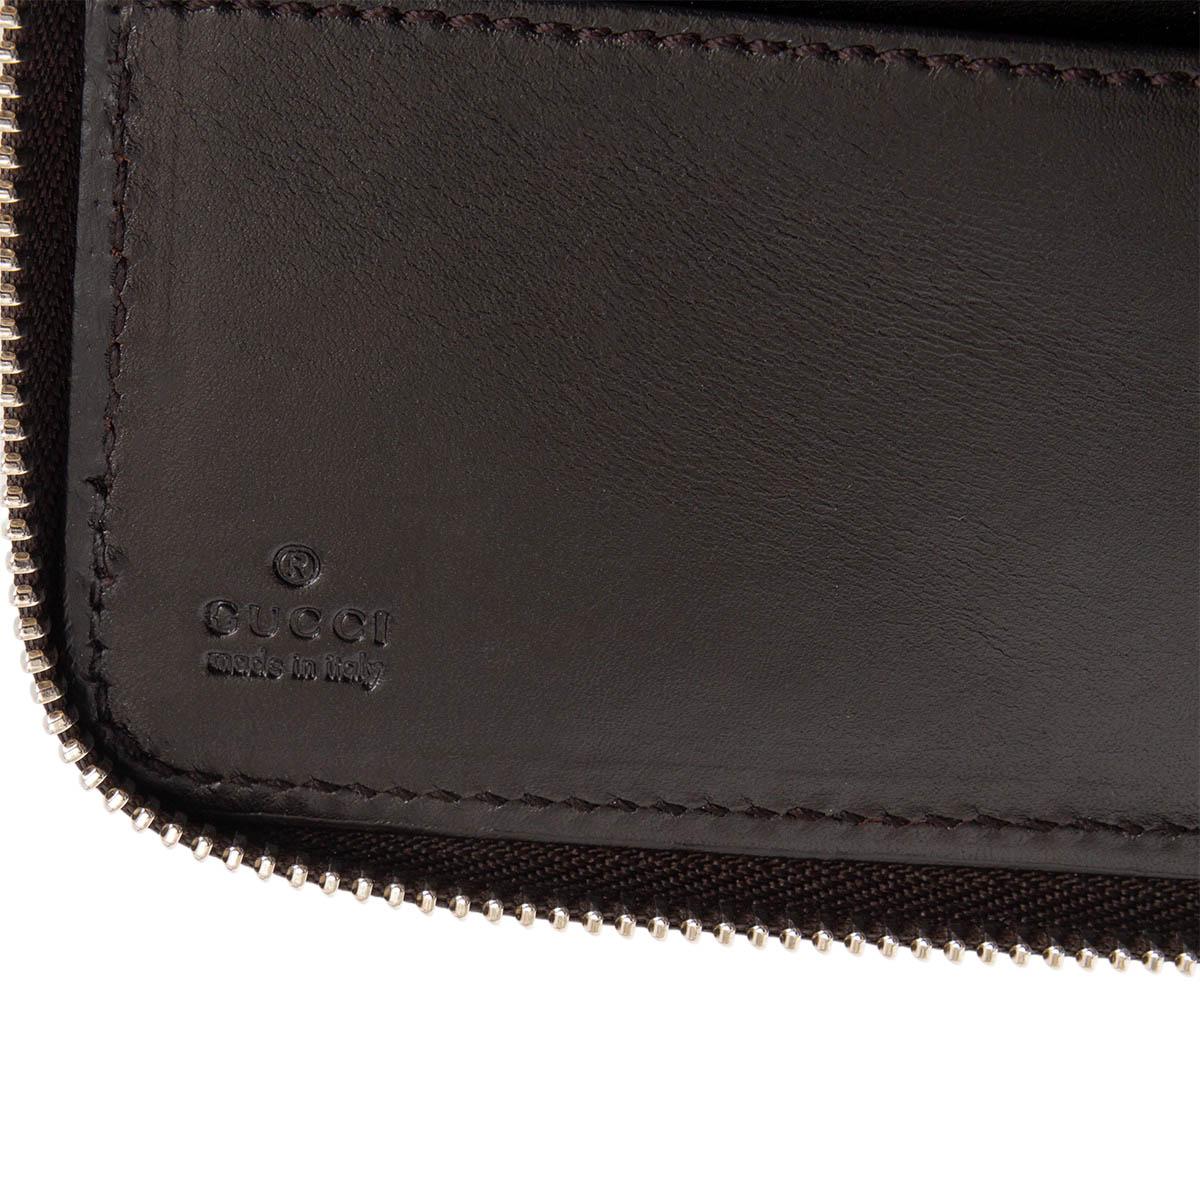 Black GUCCI dark brown leather ZIP AROUND TOP HANDLE TRAVEL Wallet